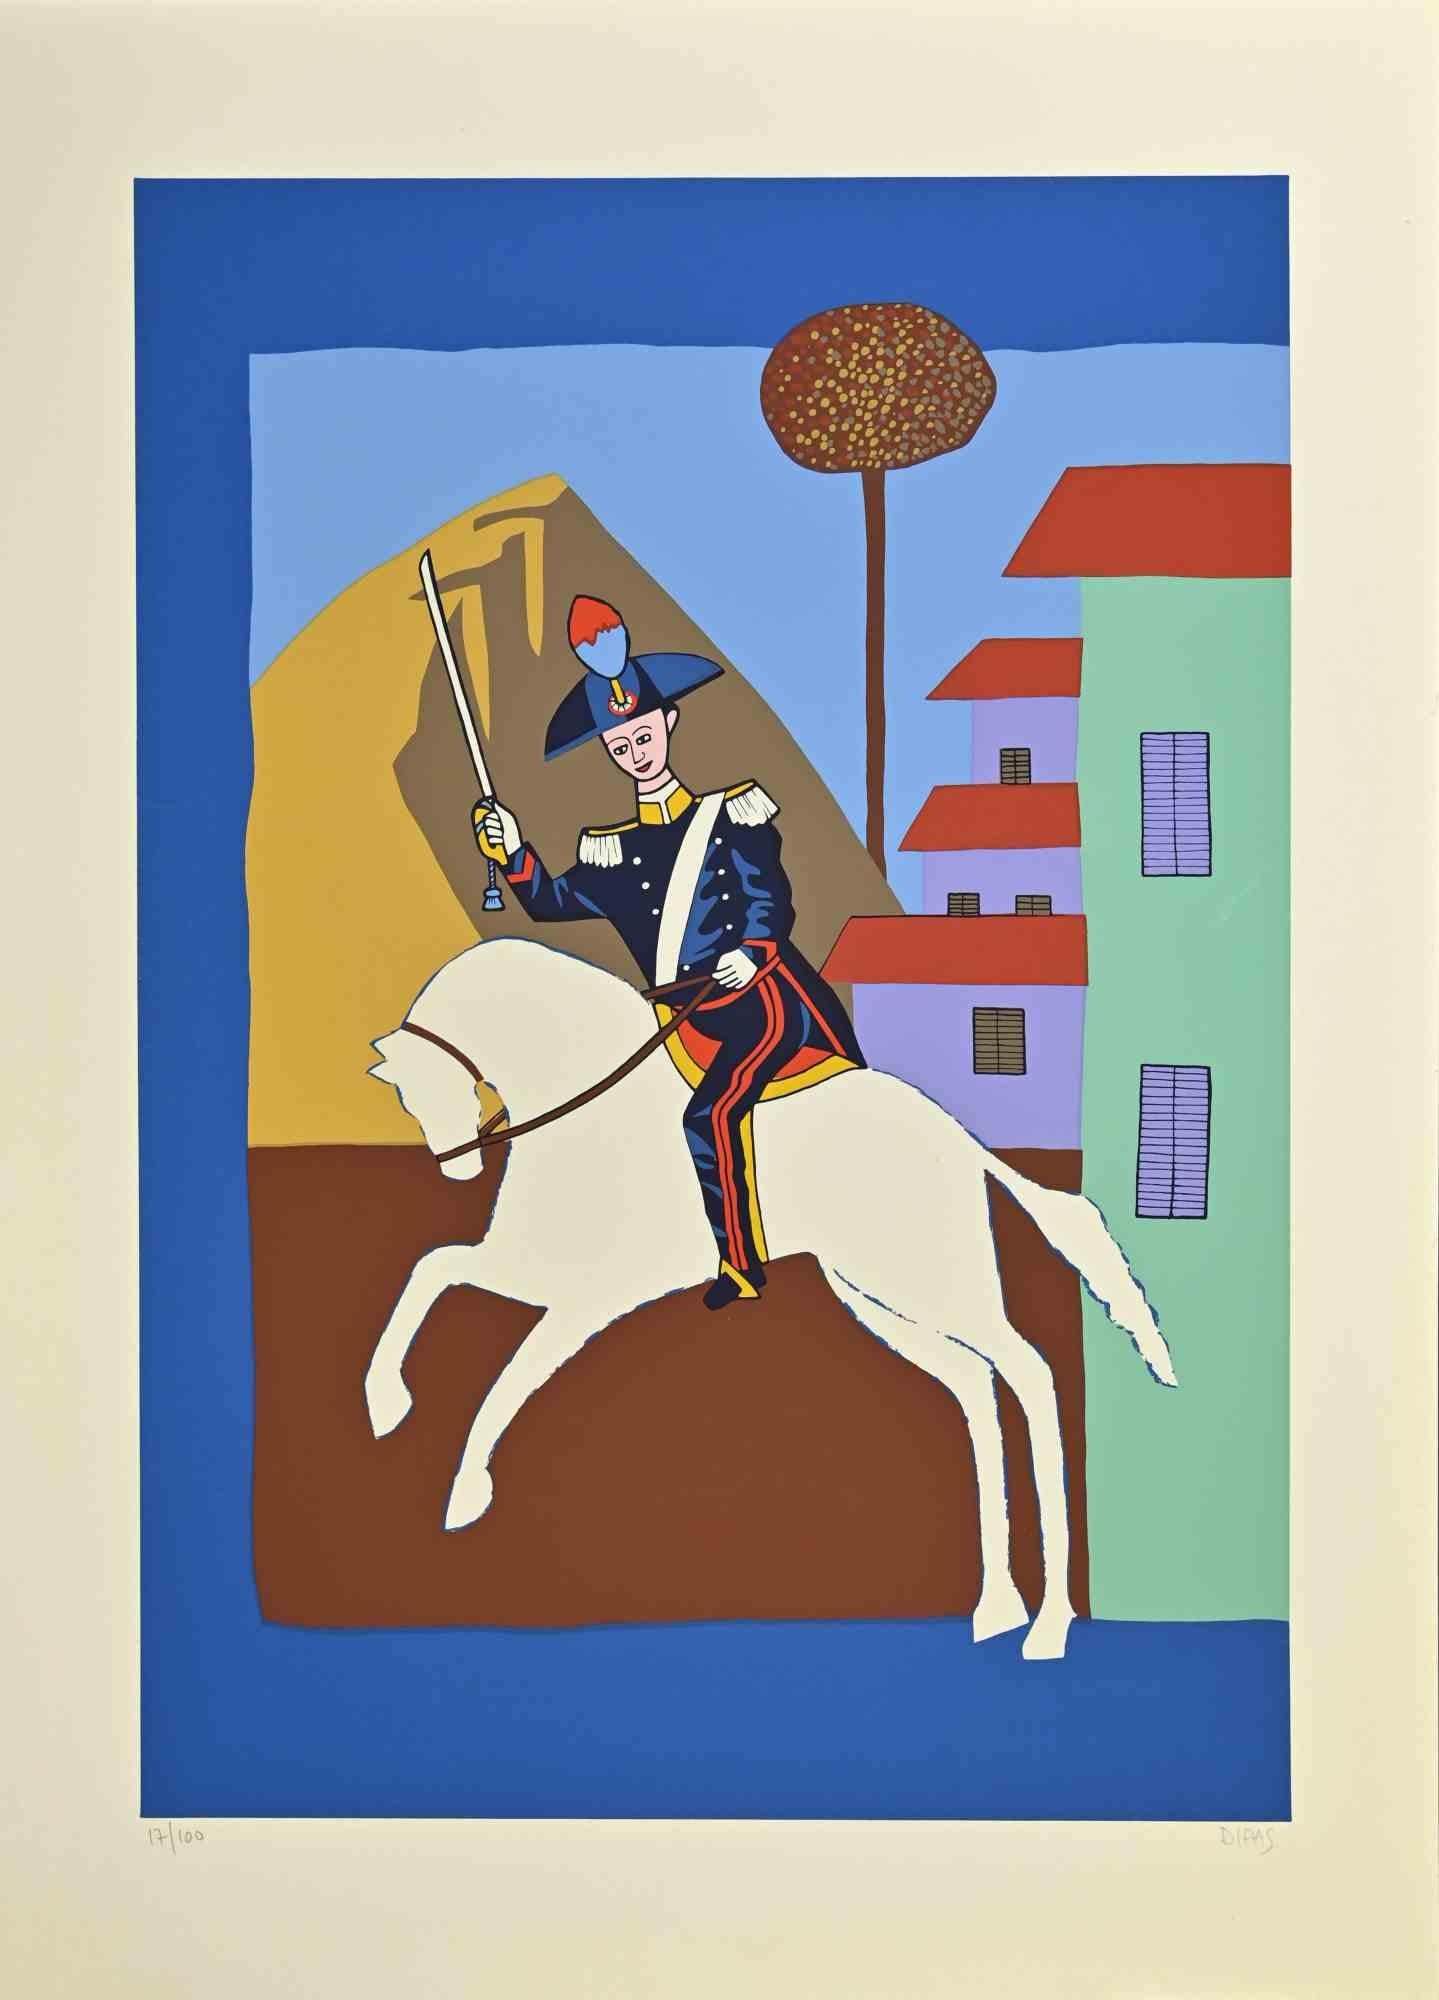 Carabinier sur cheval - Sérigraphie de Dipas - 1970